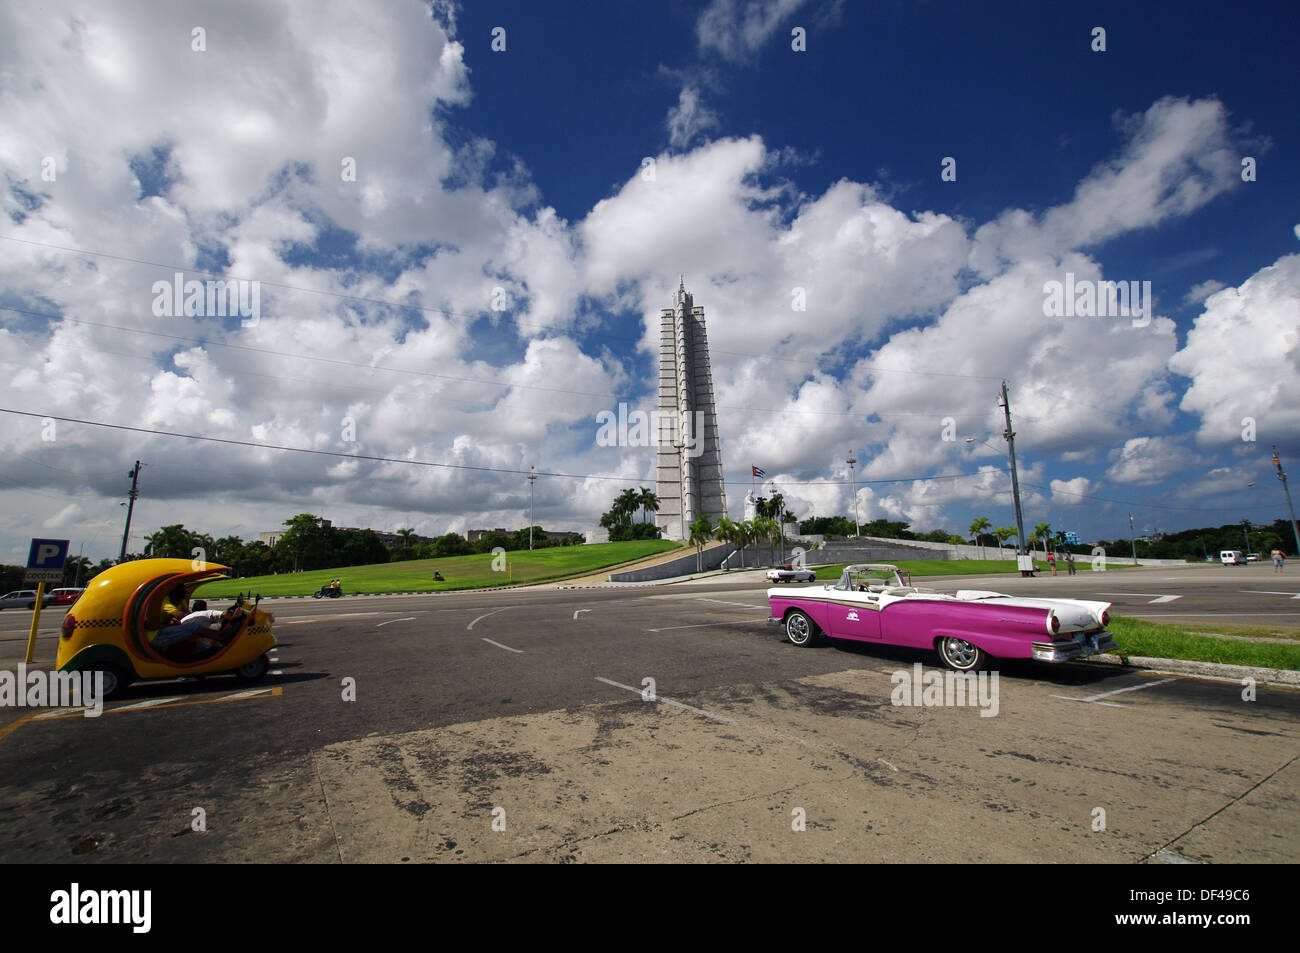 Vintage convertible and a cocotaxi parked near José Martí Memorial - Plaza de la Revolución, Havana, Cuba Stock Photo